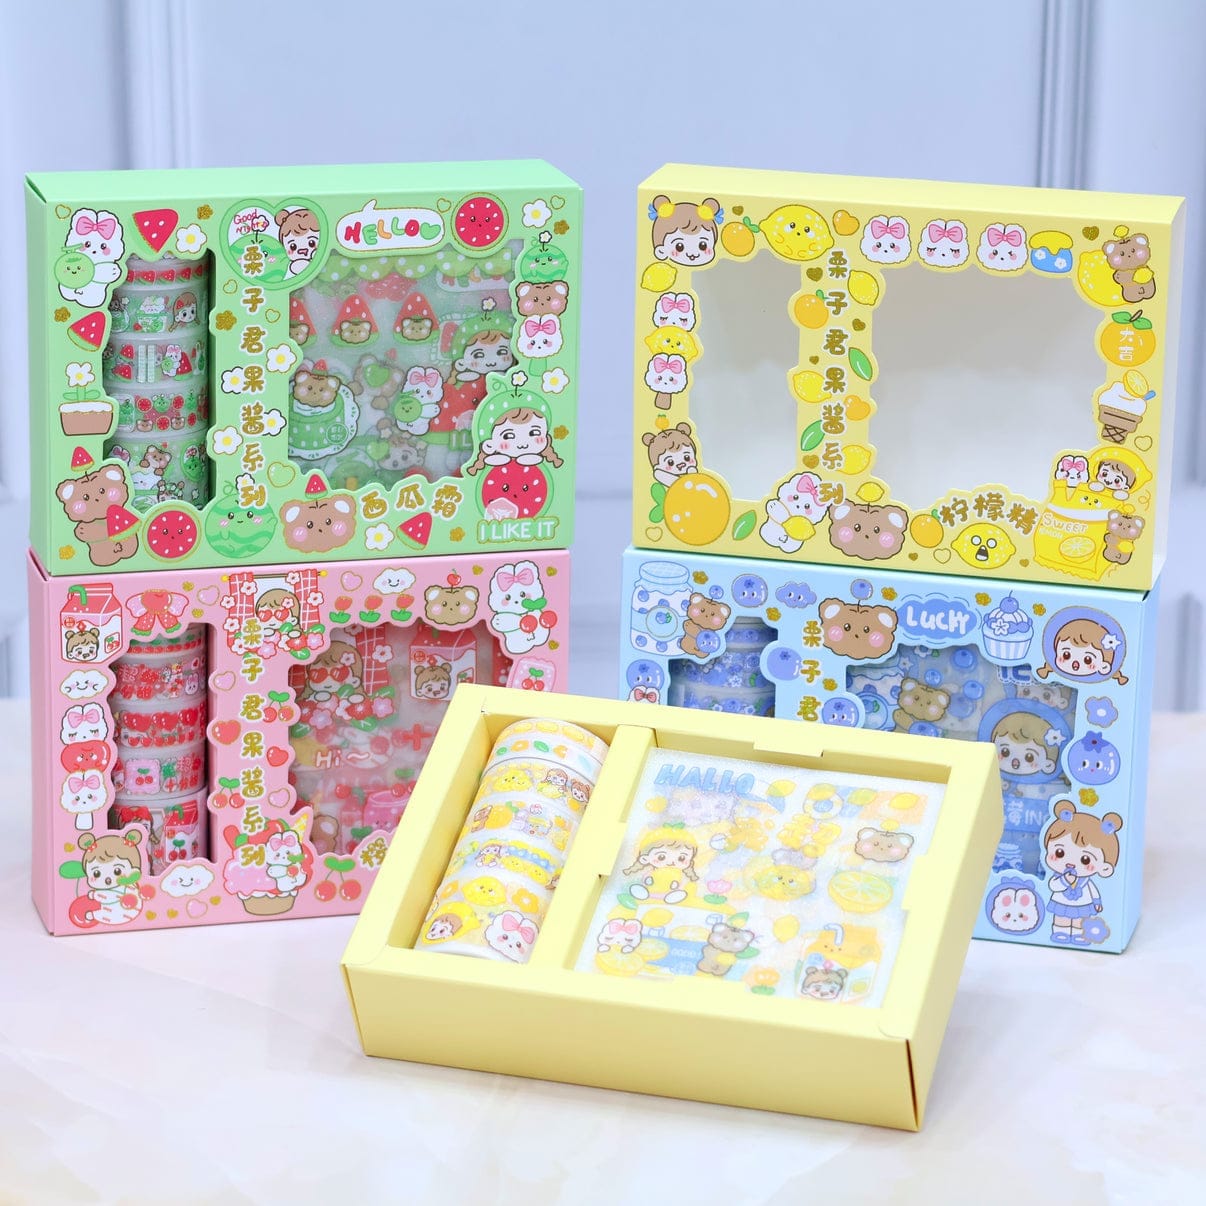 Bright International Washi Tape Kawaii Washi Tape Roll Set of 6 with Stickers Set of 6  I Scrapbooking and journaling Kit